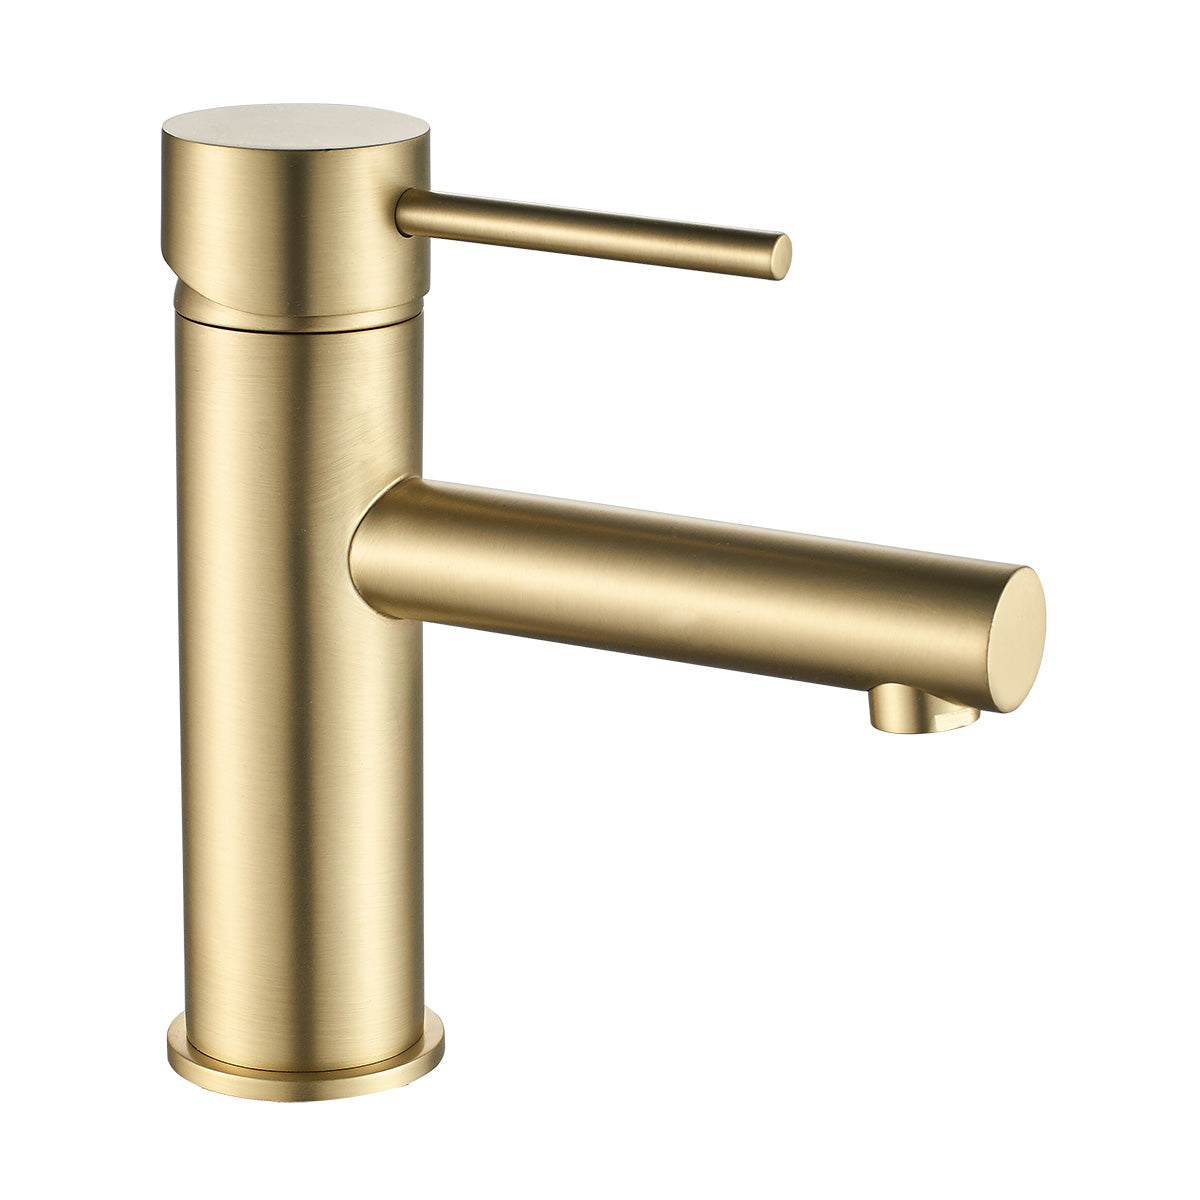 IDB7 (BG) / Ideal Basin Mixer (Brushed Gold) - Hellycar Brushed Gold Mixer Tap for Bathroom Basin